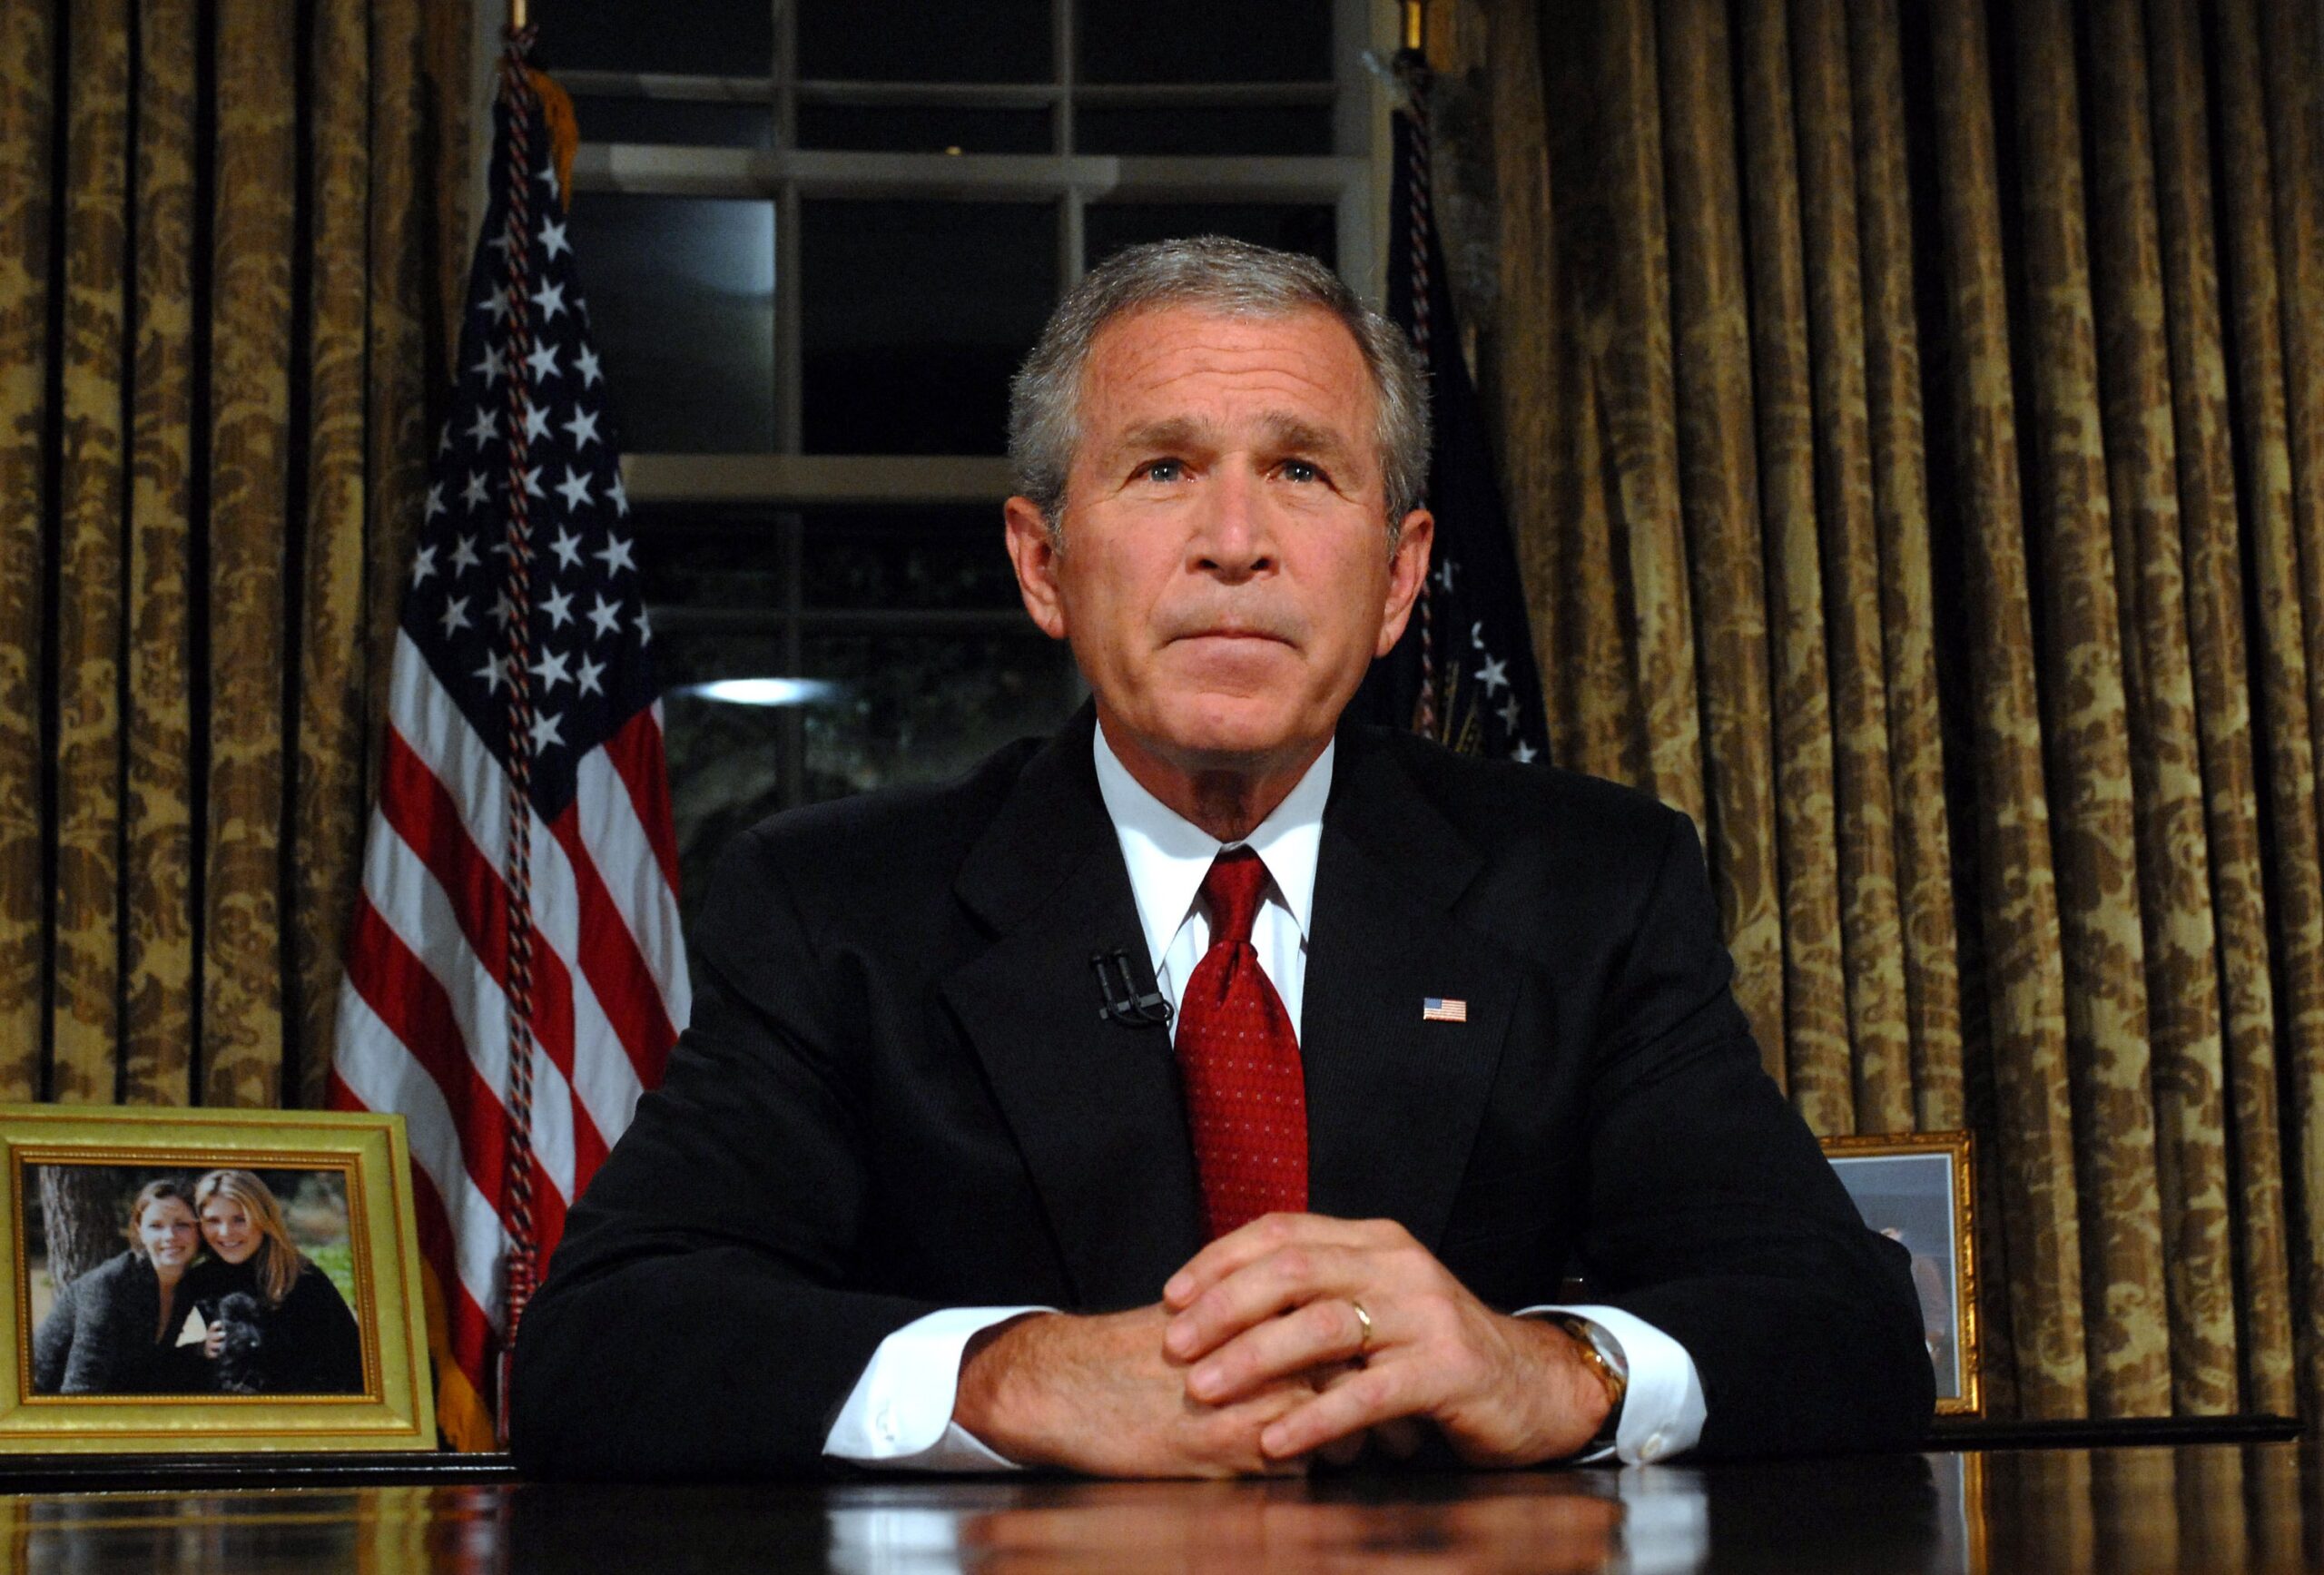 Former U.S. President George W. Bush addresses the nation, September 11, 2006 (Pool/Getty Images)